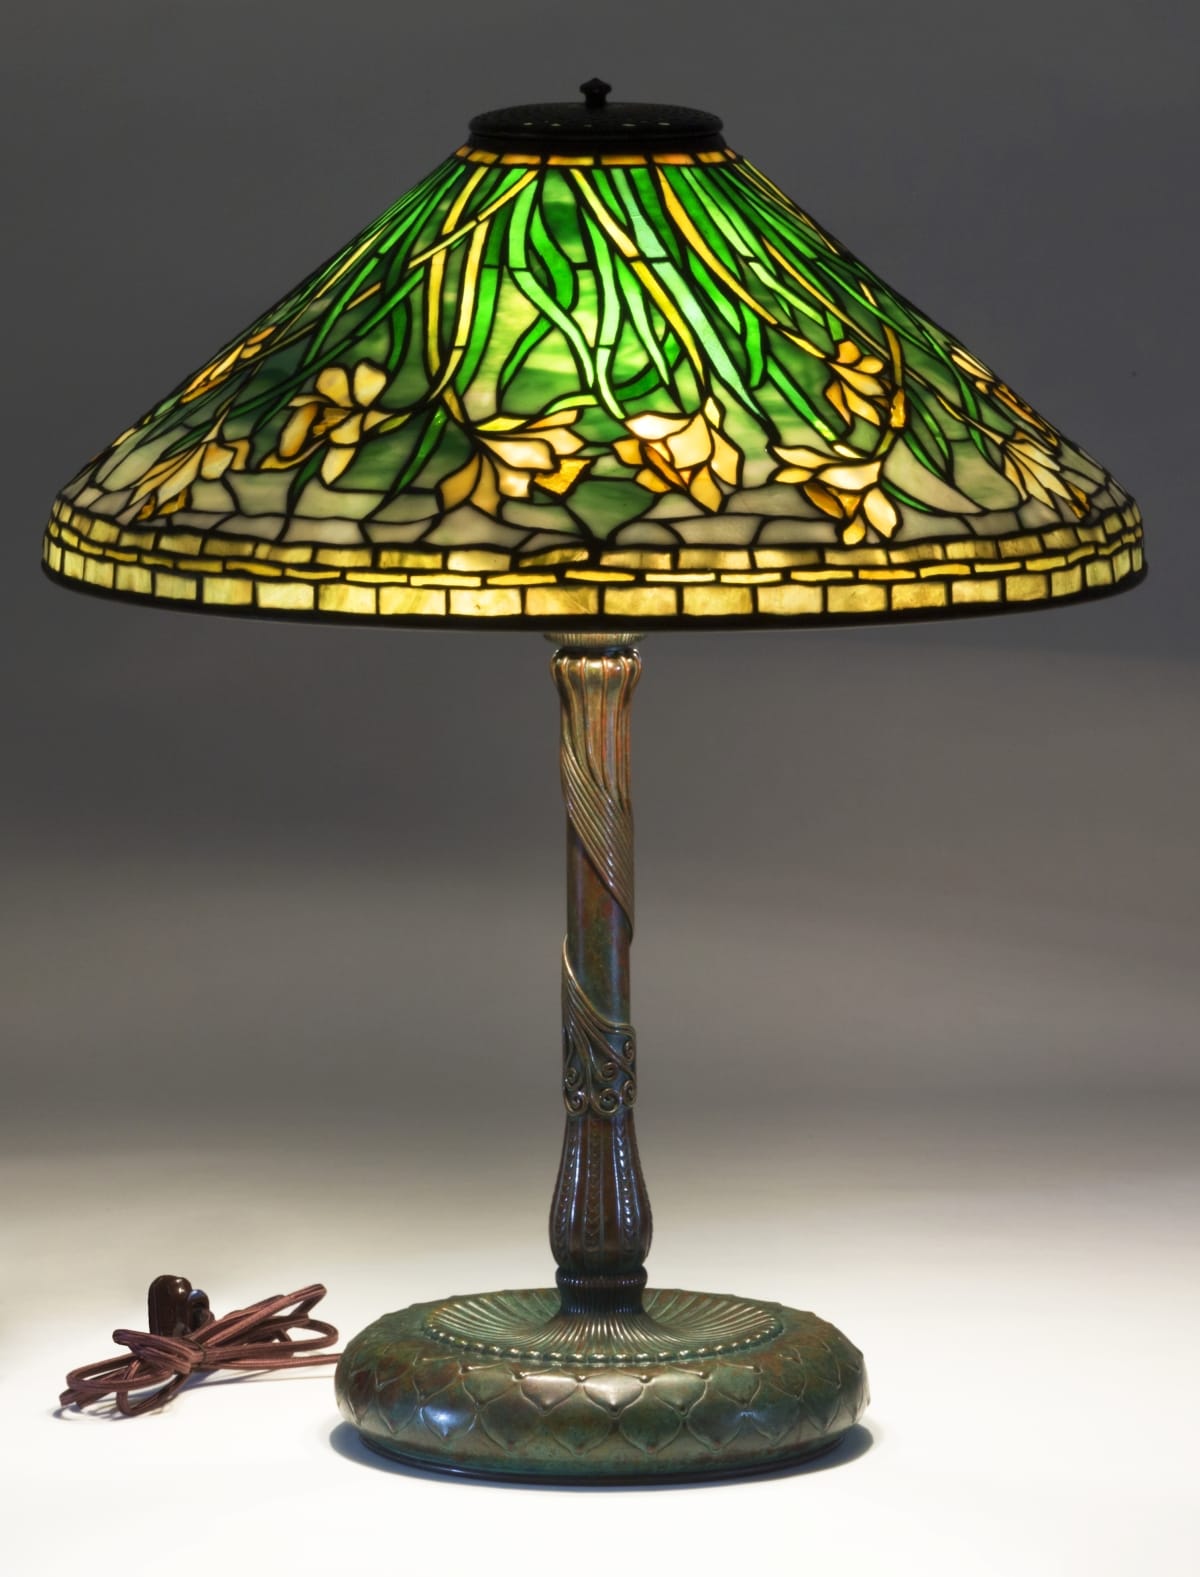 Daffodil table lamp, designed by Clara Driscoll for Tiffany Studios, 1903-1920.